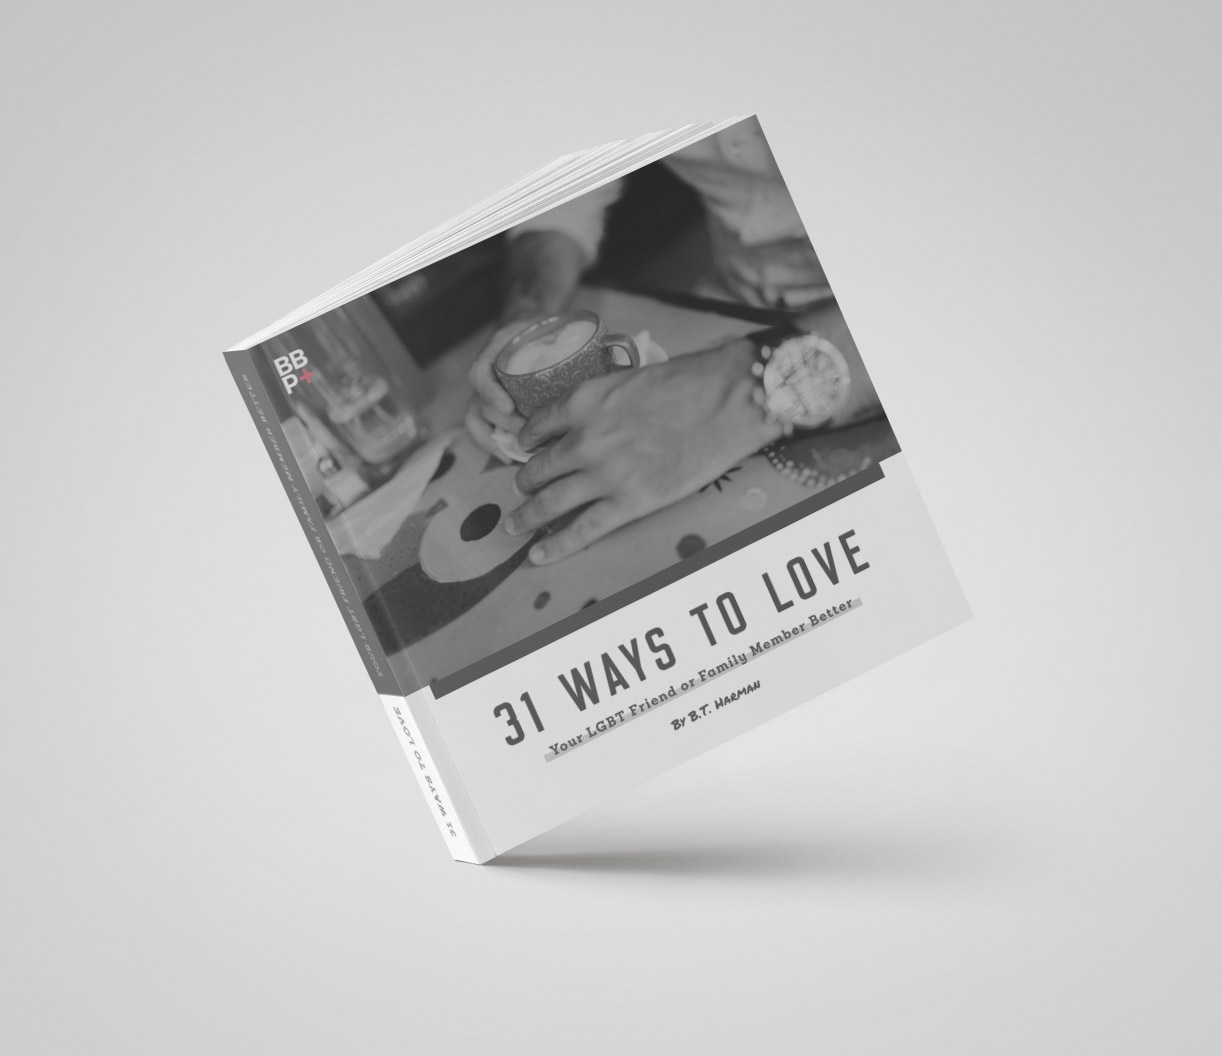 31 ways to love - cover mockup.jpg